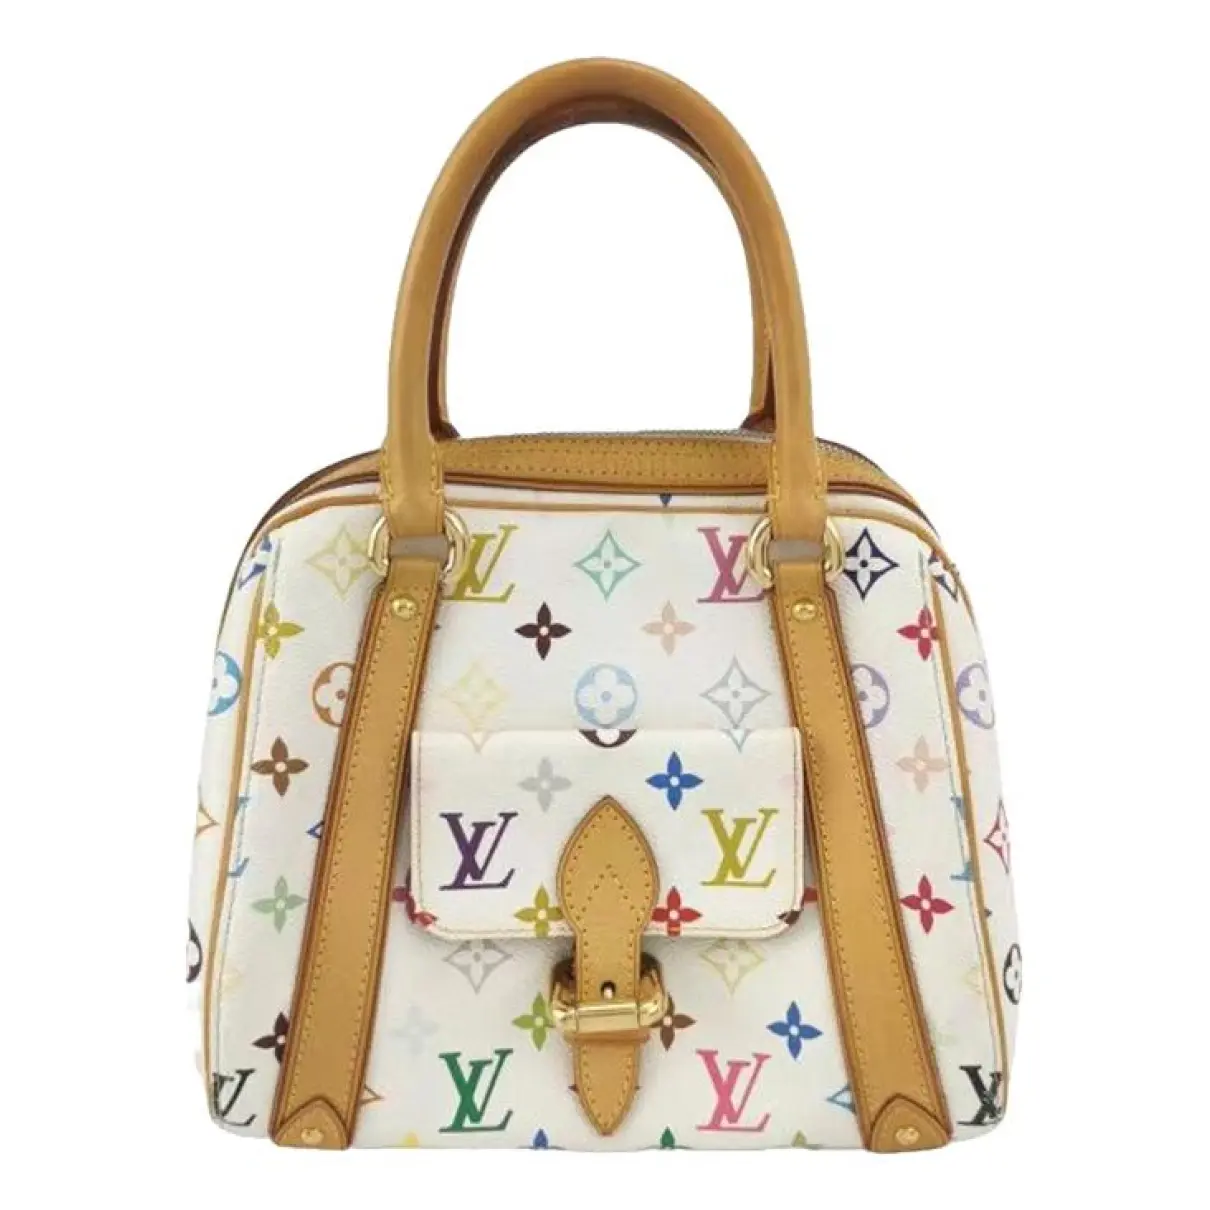 Priscilla leather handbag Louis Vuitton